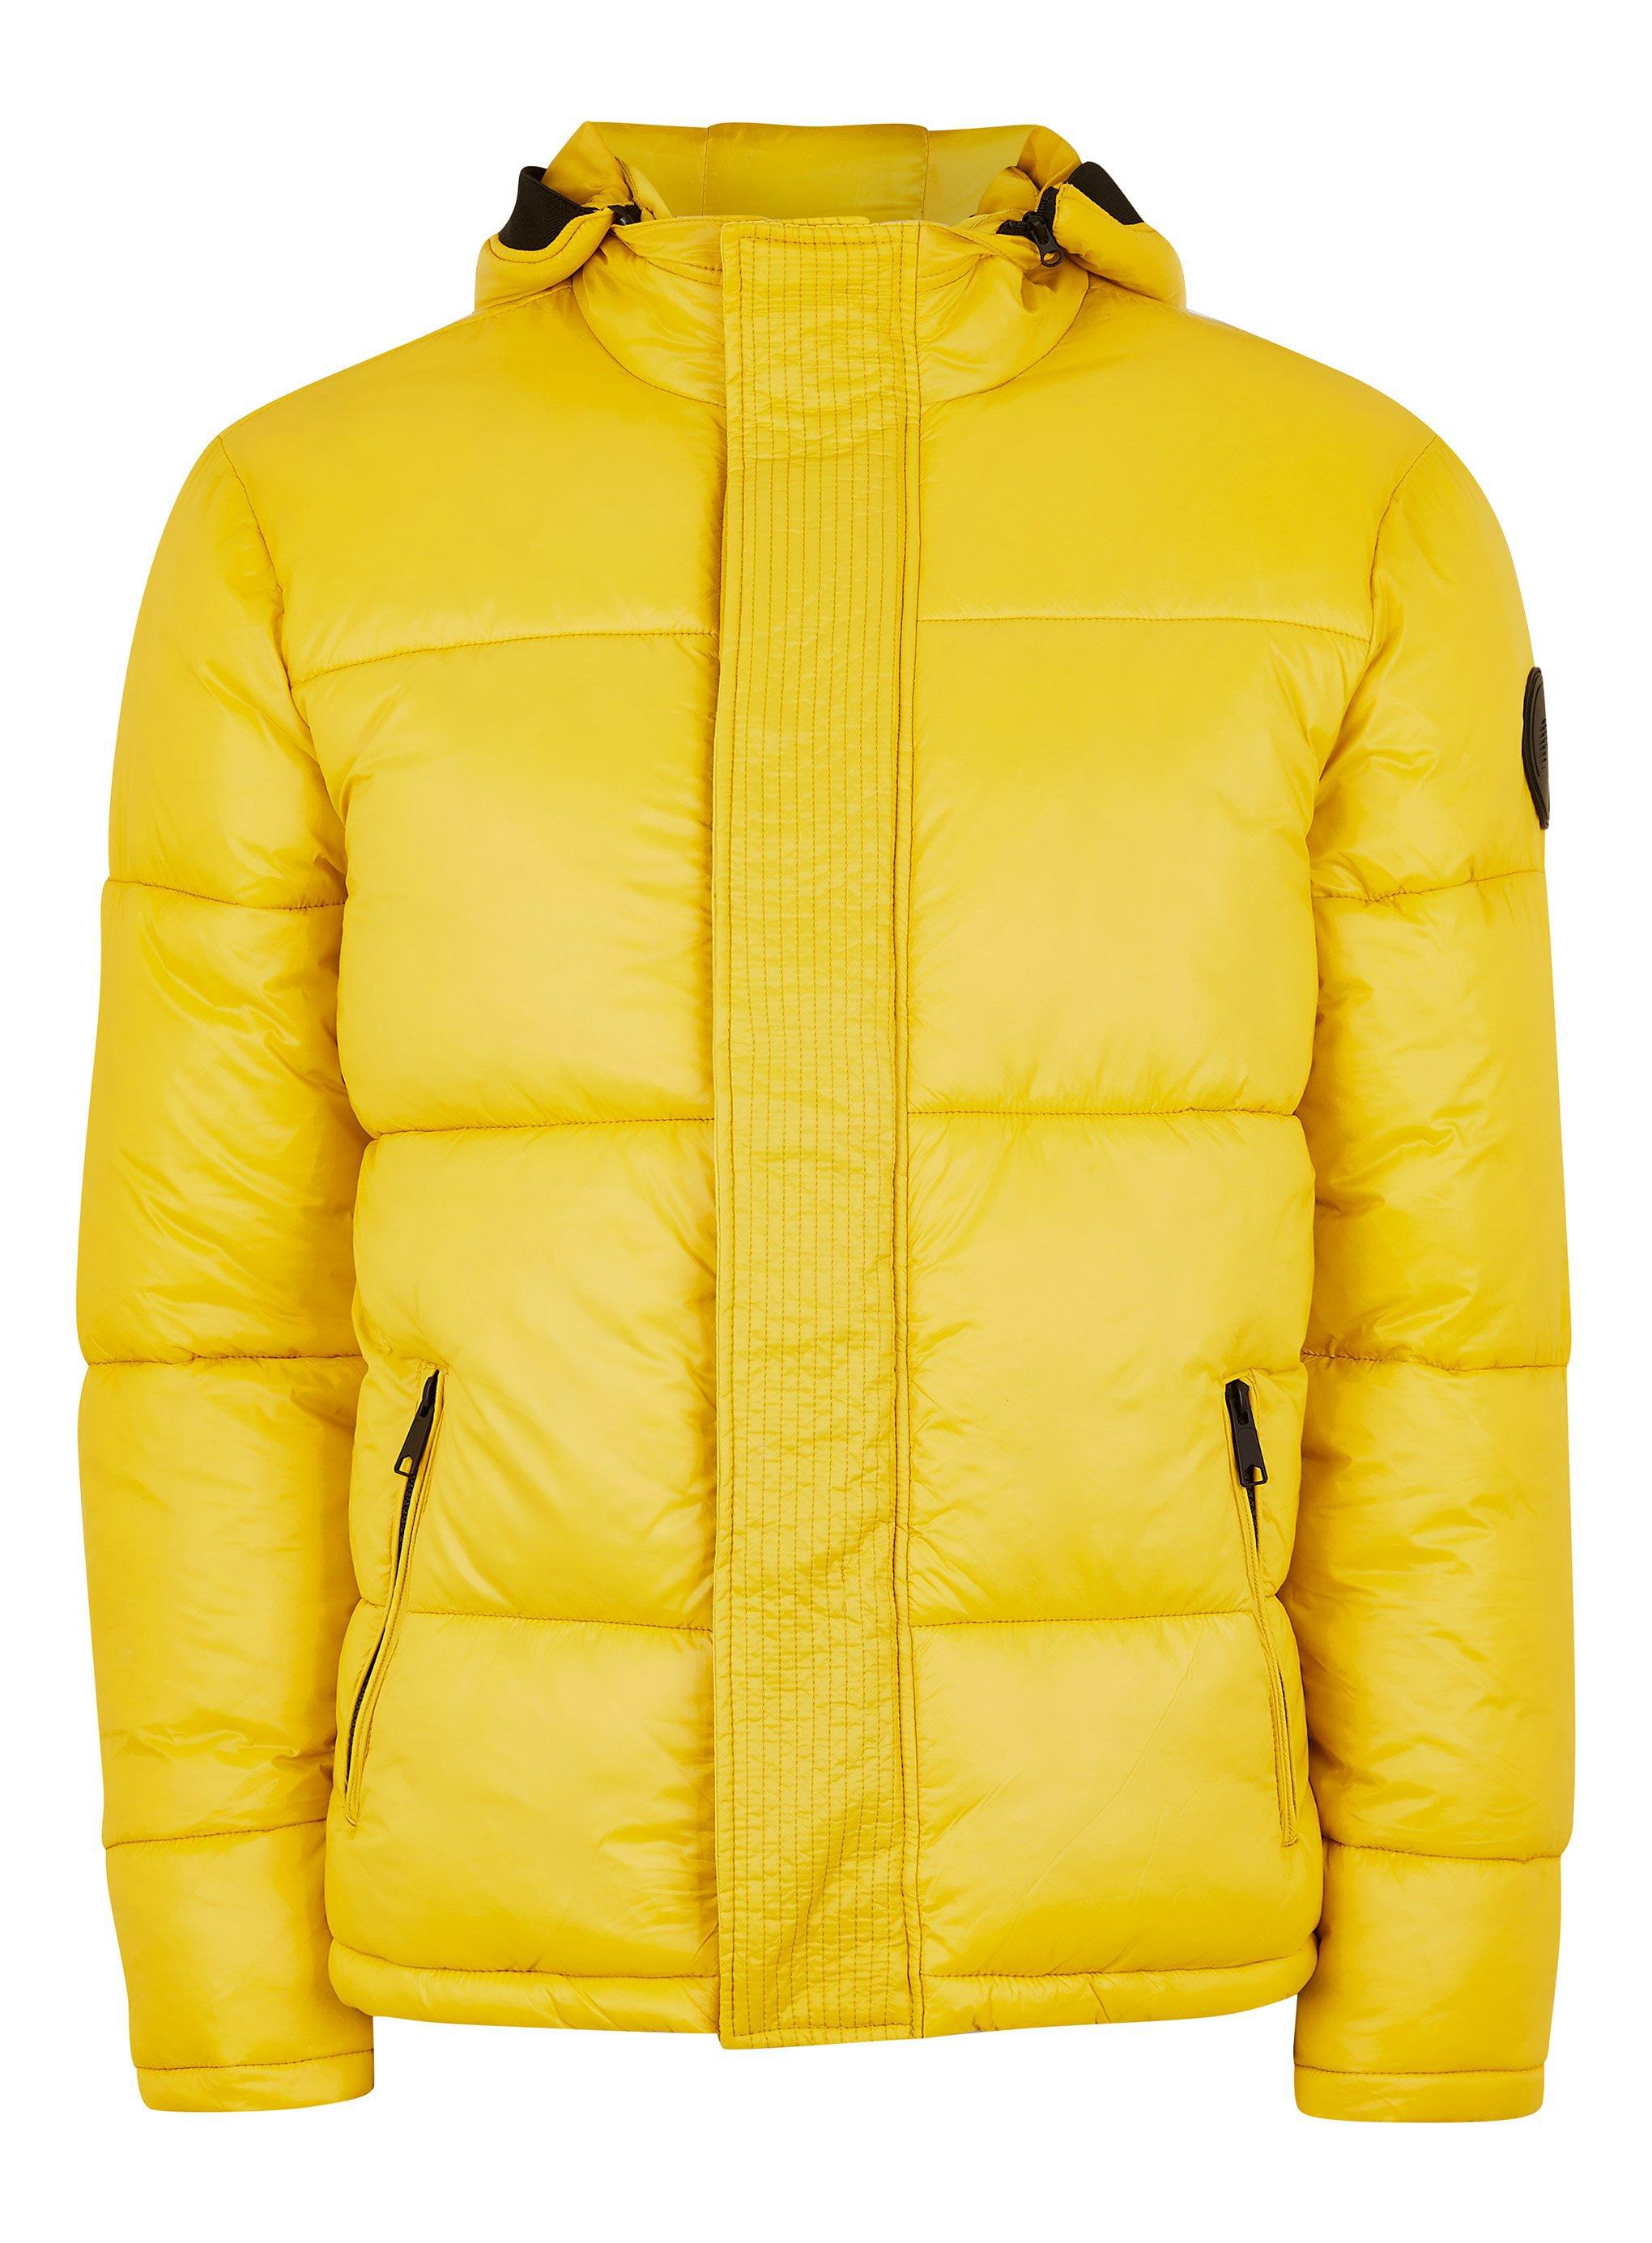 TOPMAN Puffer Jacket in Yellow for Men - Lyst